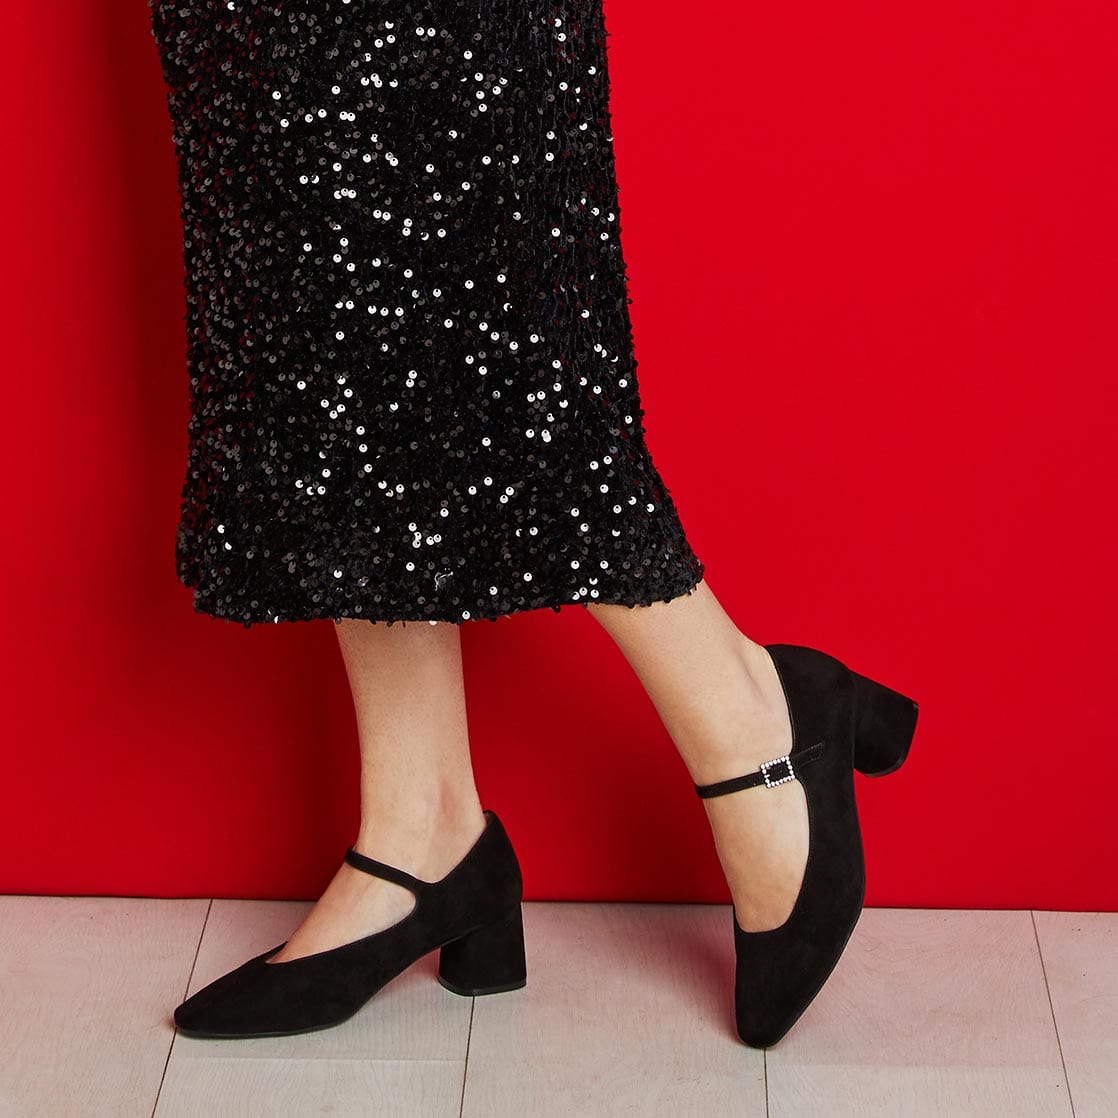 Buy PARVISH Women & Girls Fashion Black Block Heels Bling - 7 at Amazon.in